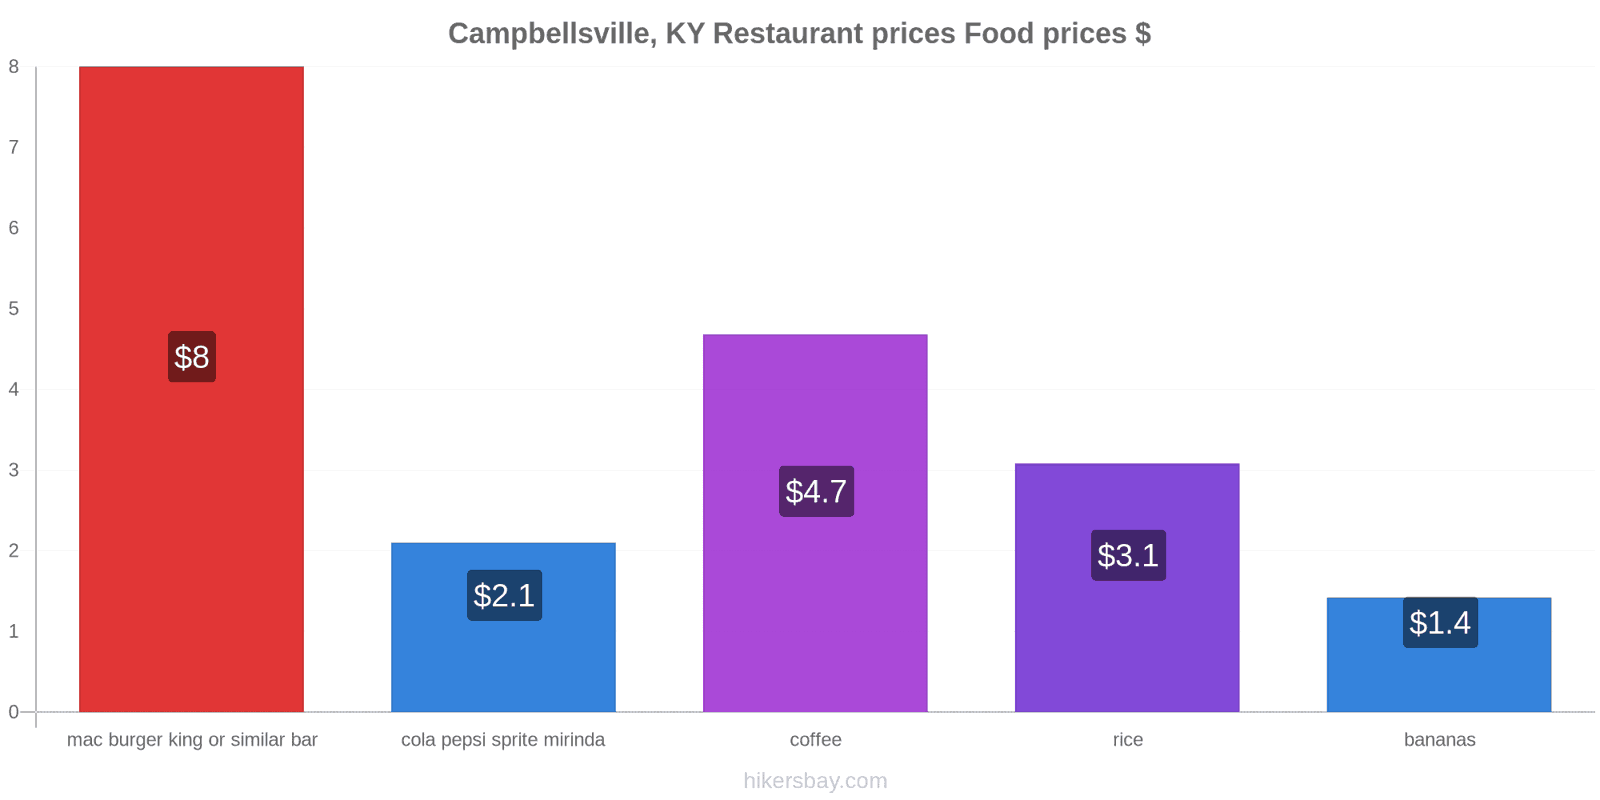 Campbellsville, KY price changes hikersbay.com